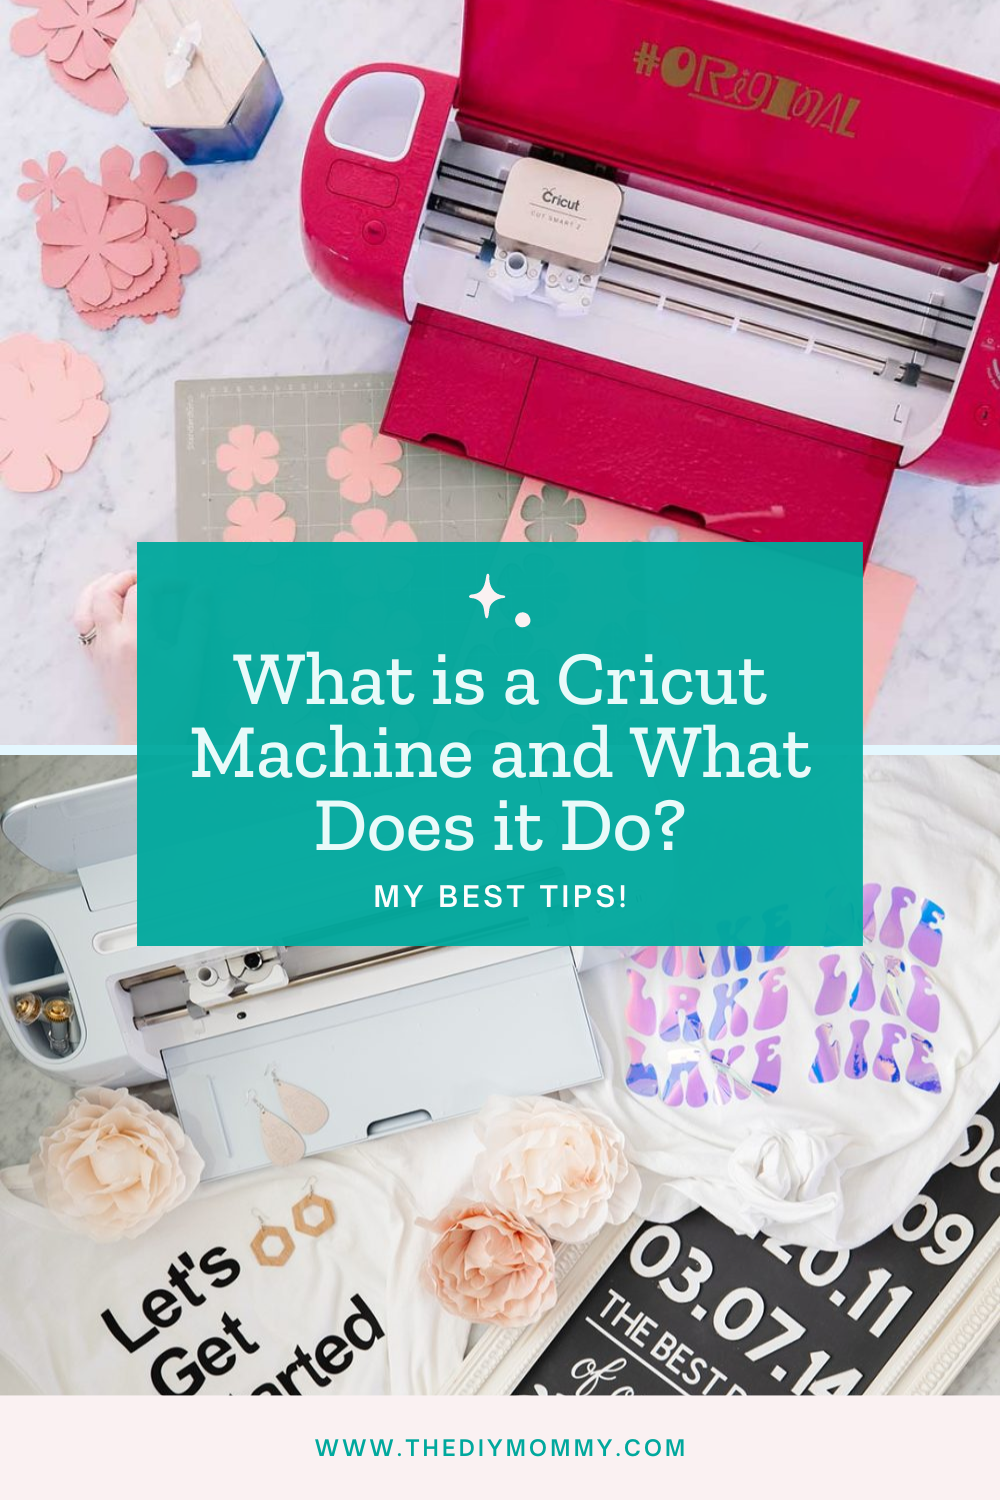 How Does the Cricut Machine Work?